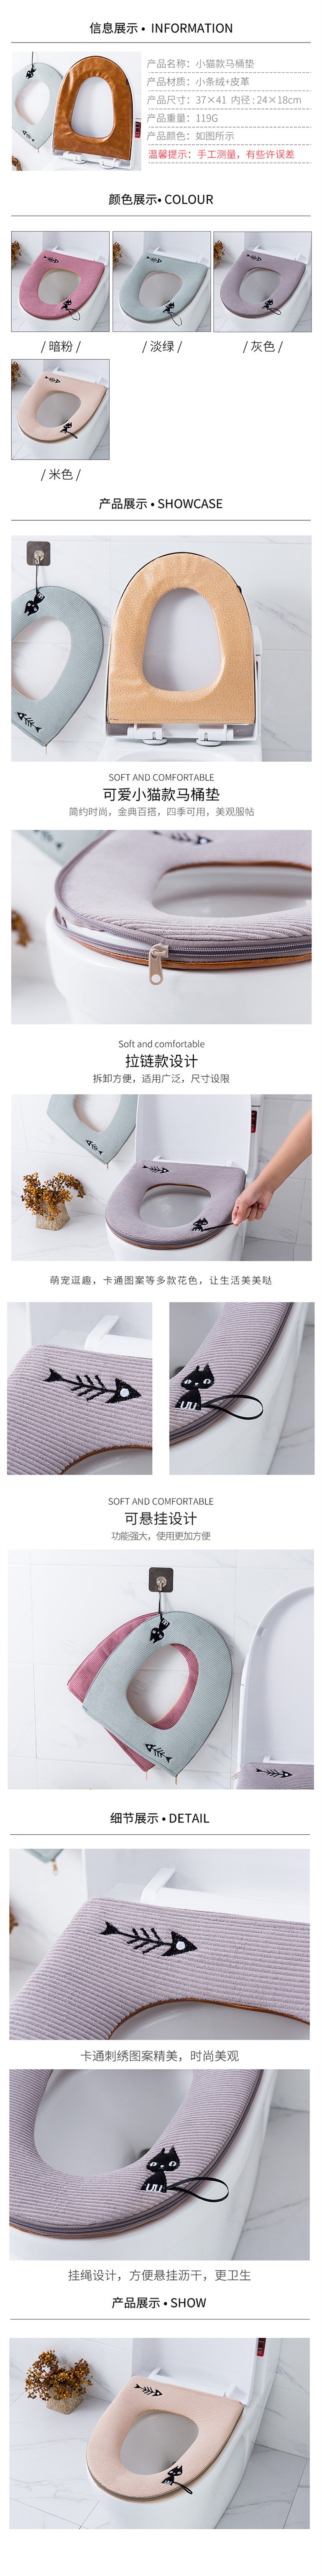 Cute Cat Toilet seat cushion Beige 1pcs